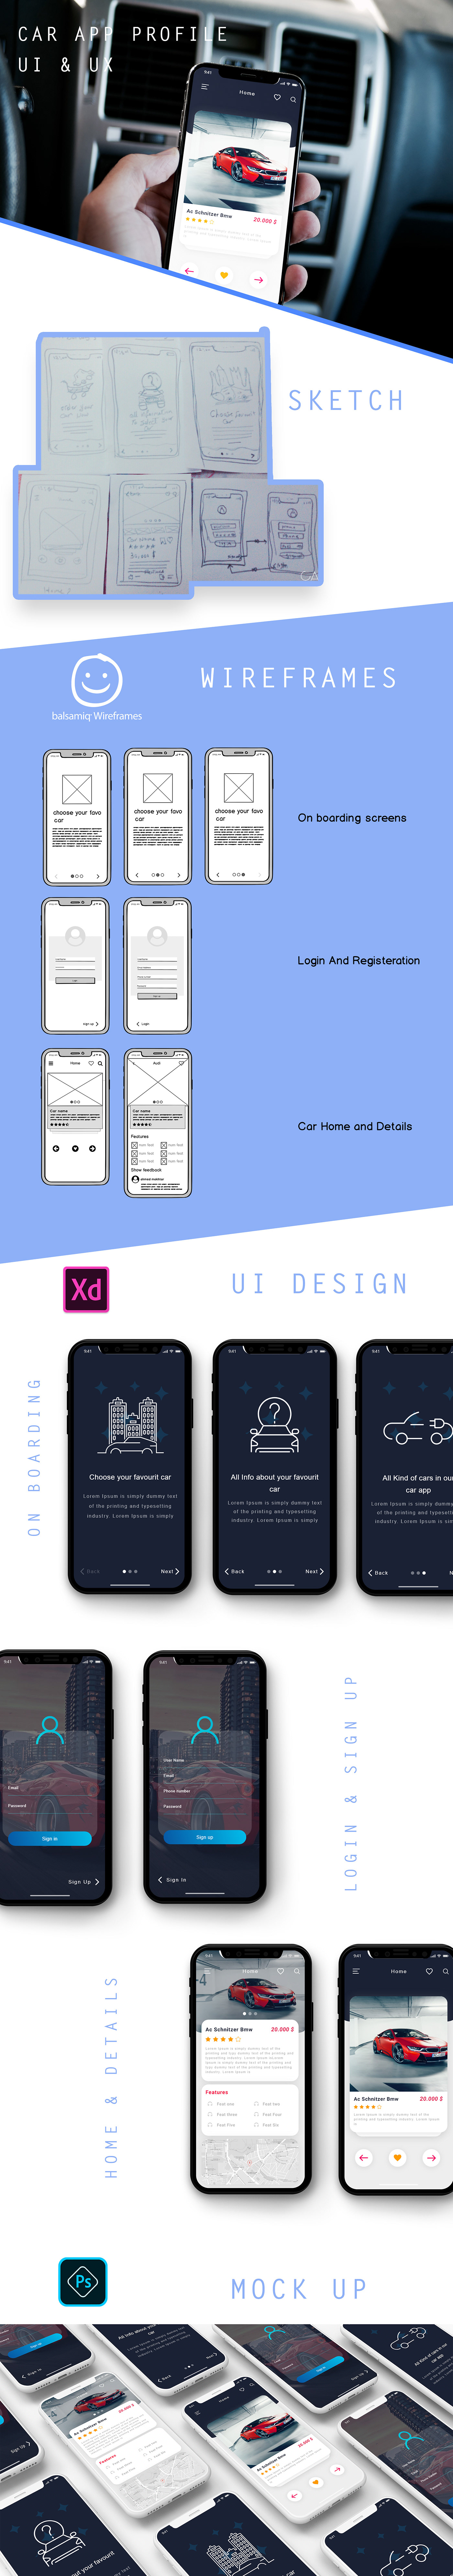 UI ux I Phone X Mobile app car app